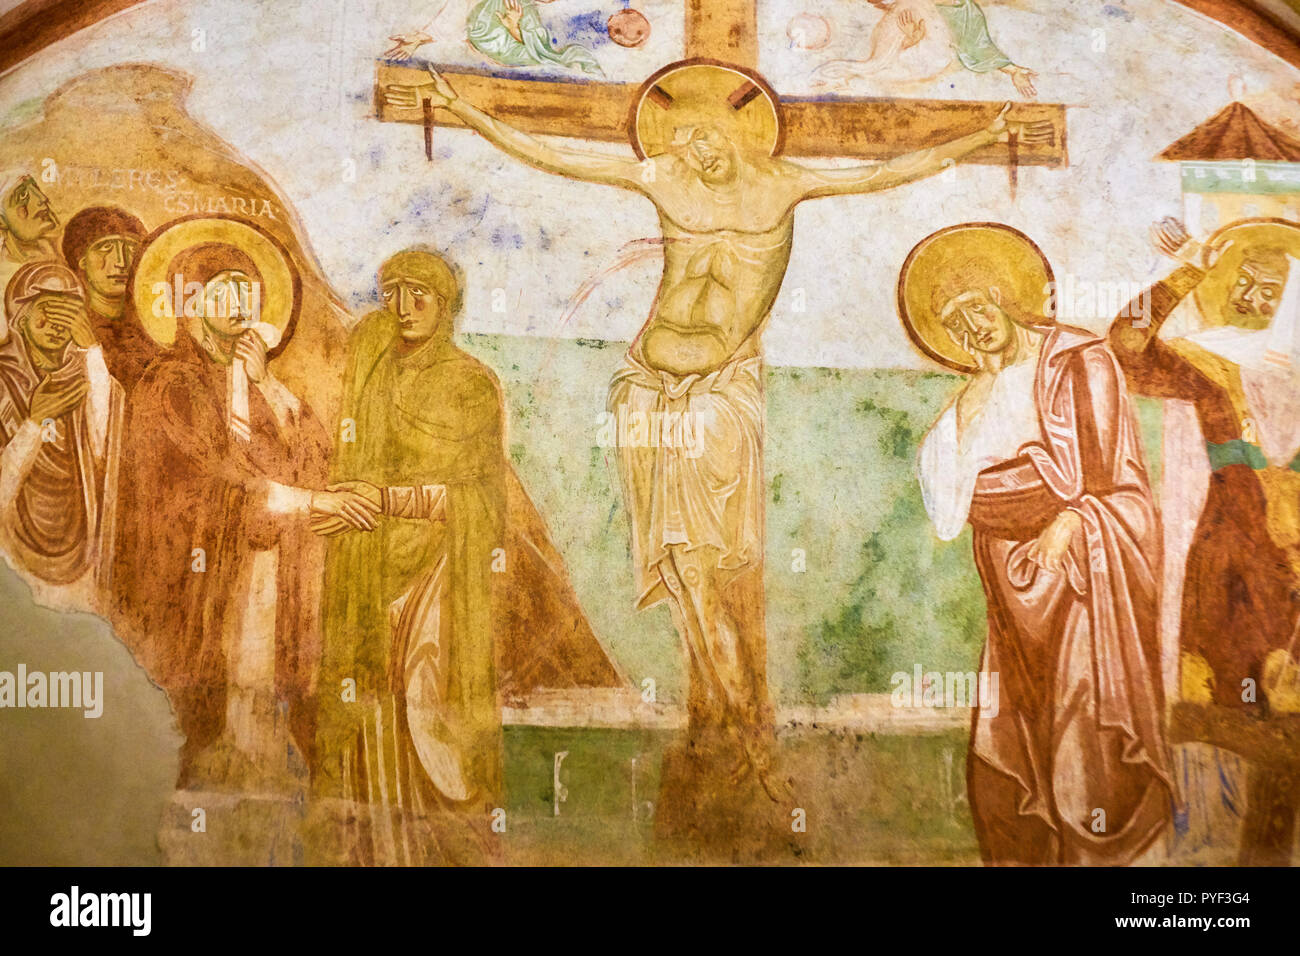 Italien, Friaul Julisch Aquilee, Aquileia, Basilika von Santa Maria Assunta, neunten Jahrhundert christliche Fresken, Krypta Decke, Stockfoto